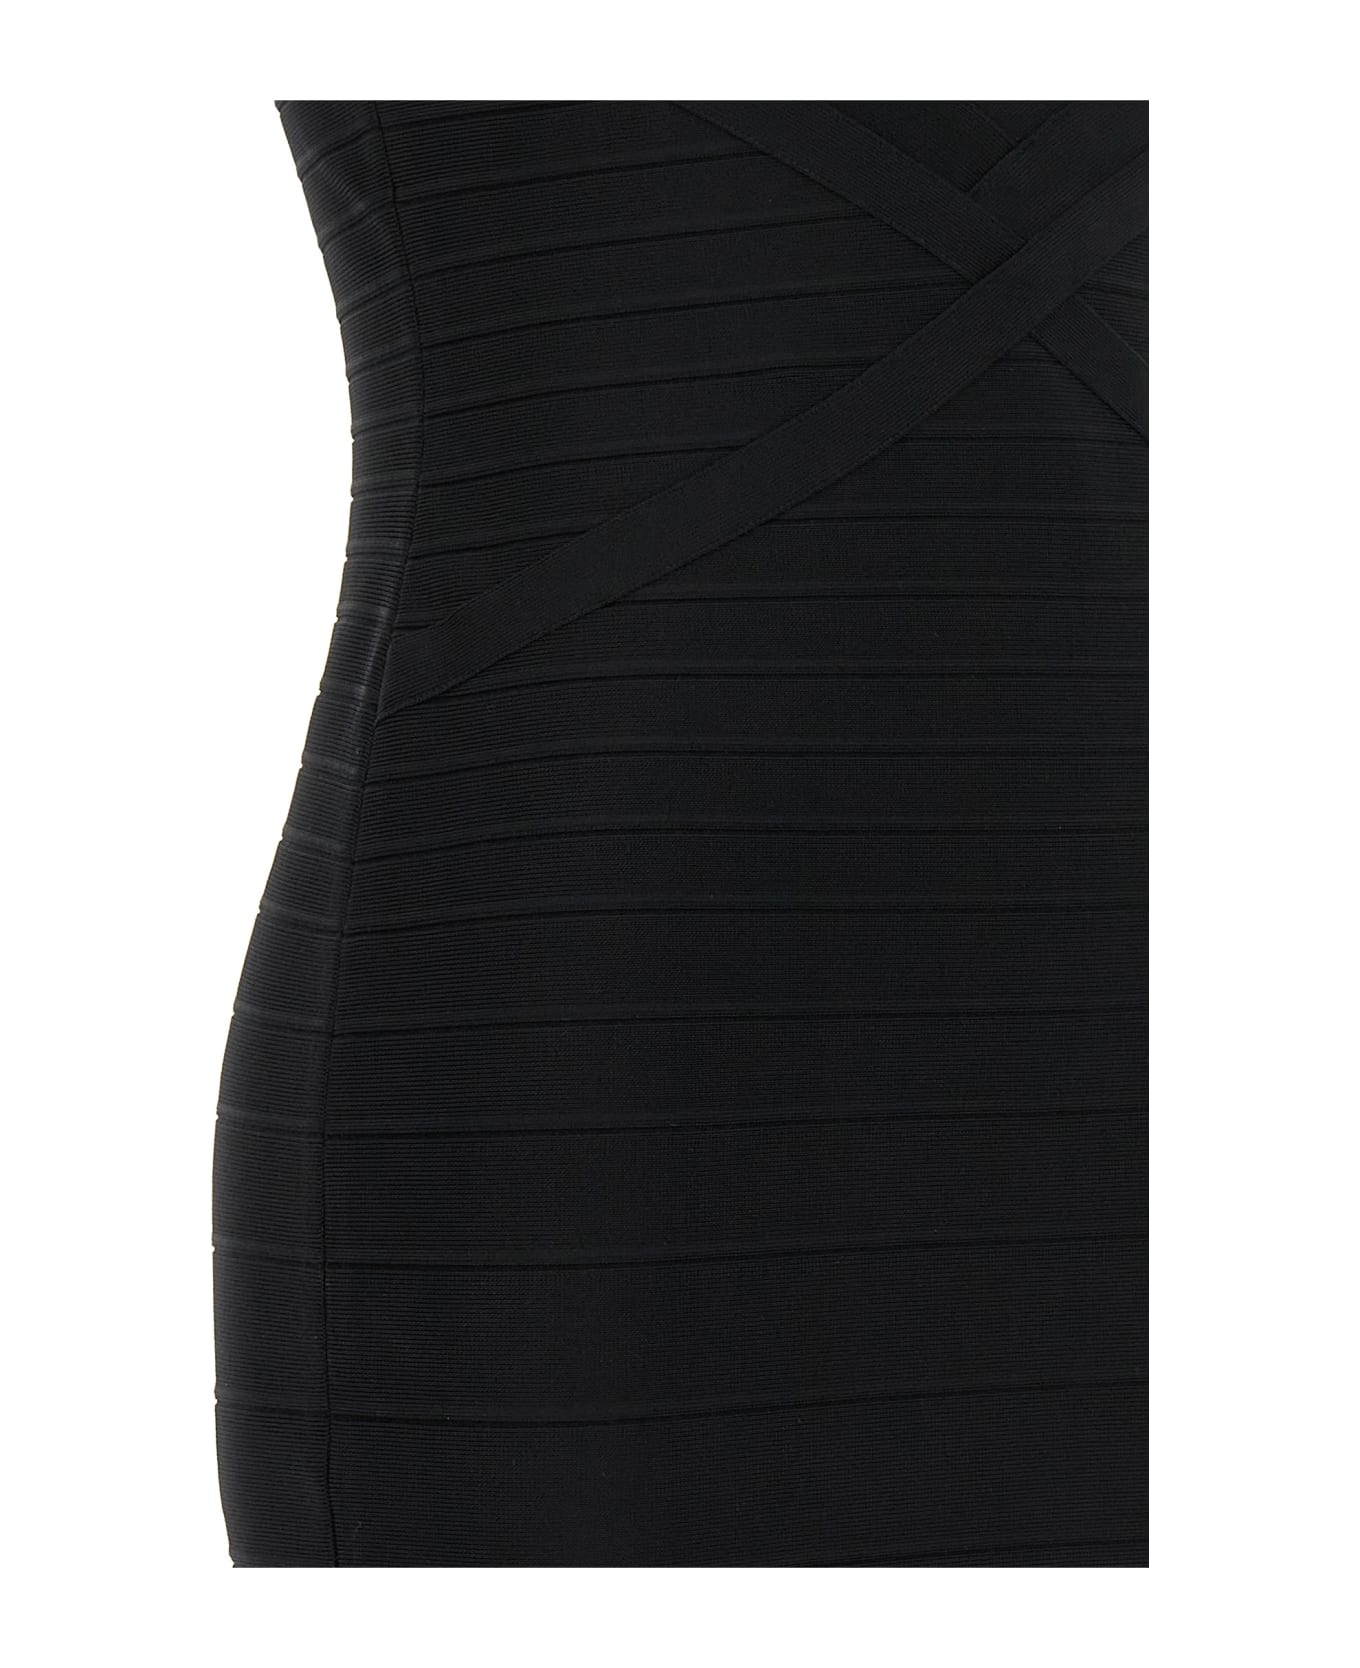 Hervé Léger 'icon Bandage Bustier Mini' Dress - Black  